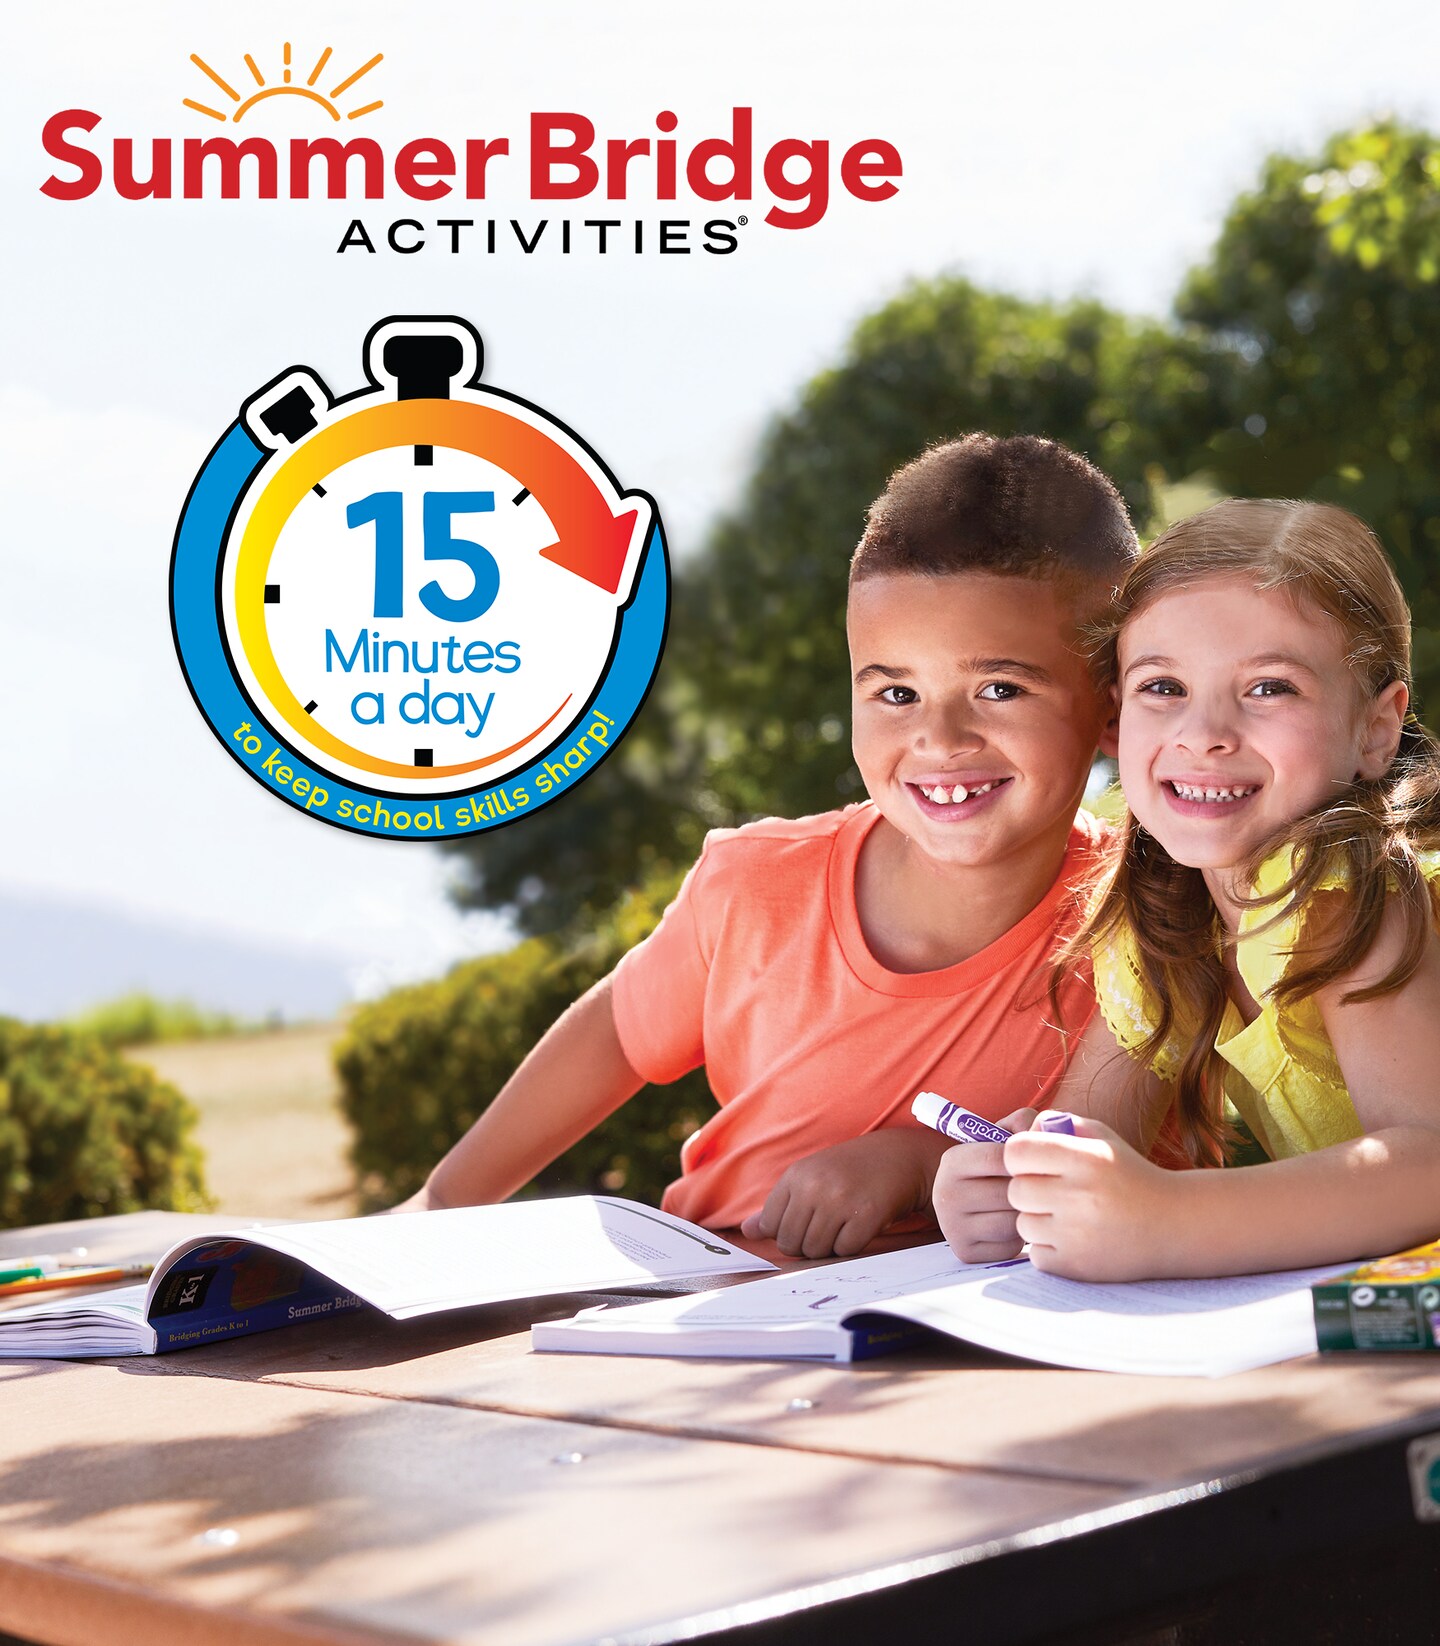 Summer Bridge Activities Preschool to Kindergarten Workbooks, Phonics, Handwriting, Math, Early Learning Summer Learning Activities, Kindergarten Workbooks All Subjects With Flash Cards